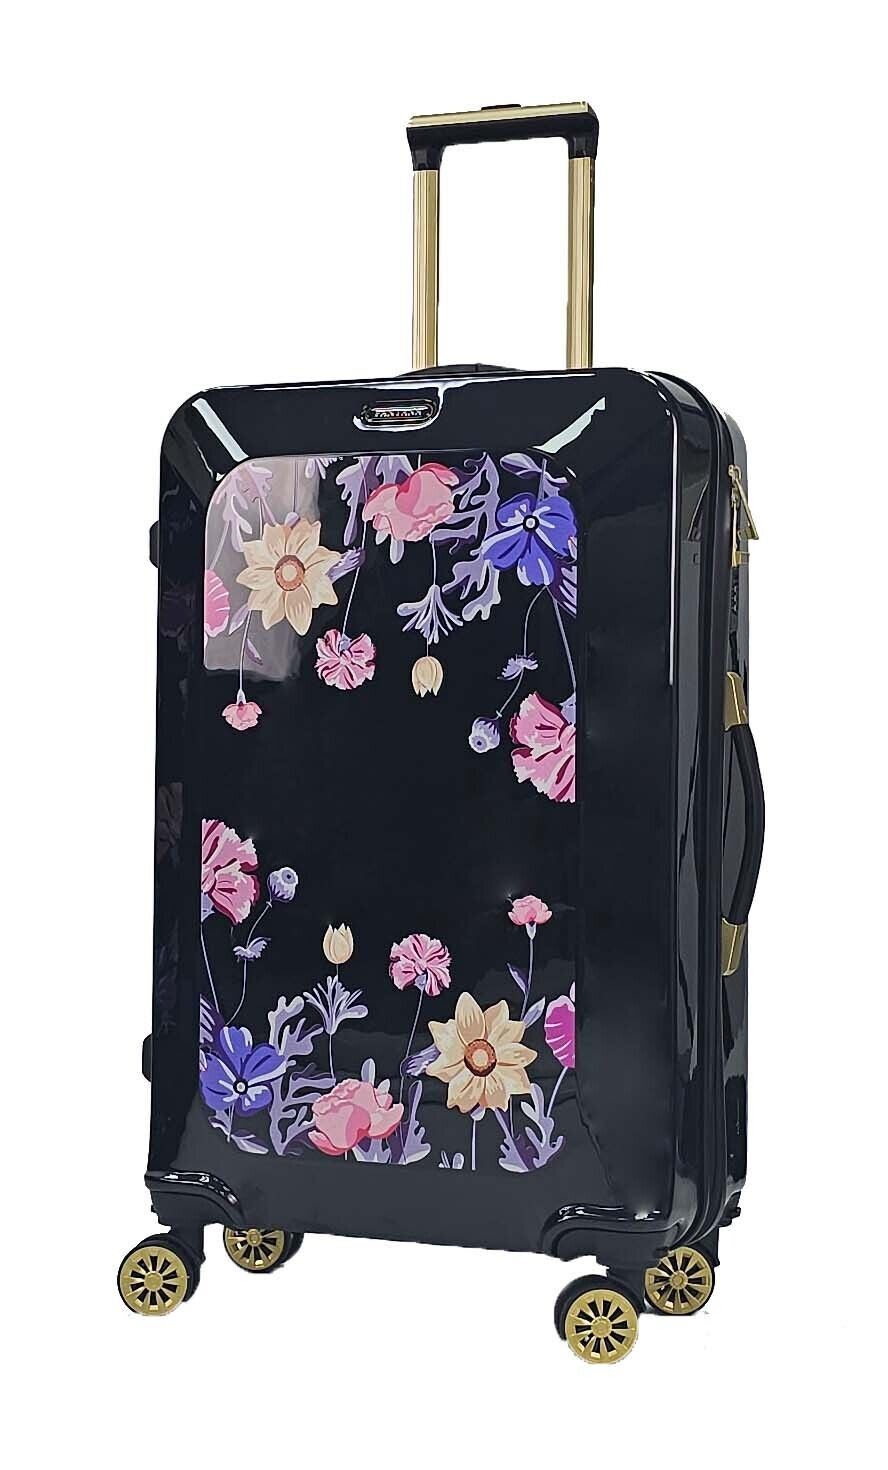 Butler Medium Hard Shell Suitcase in Black